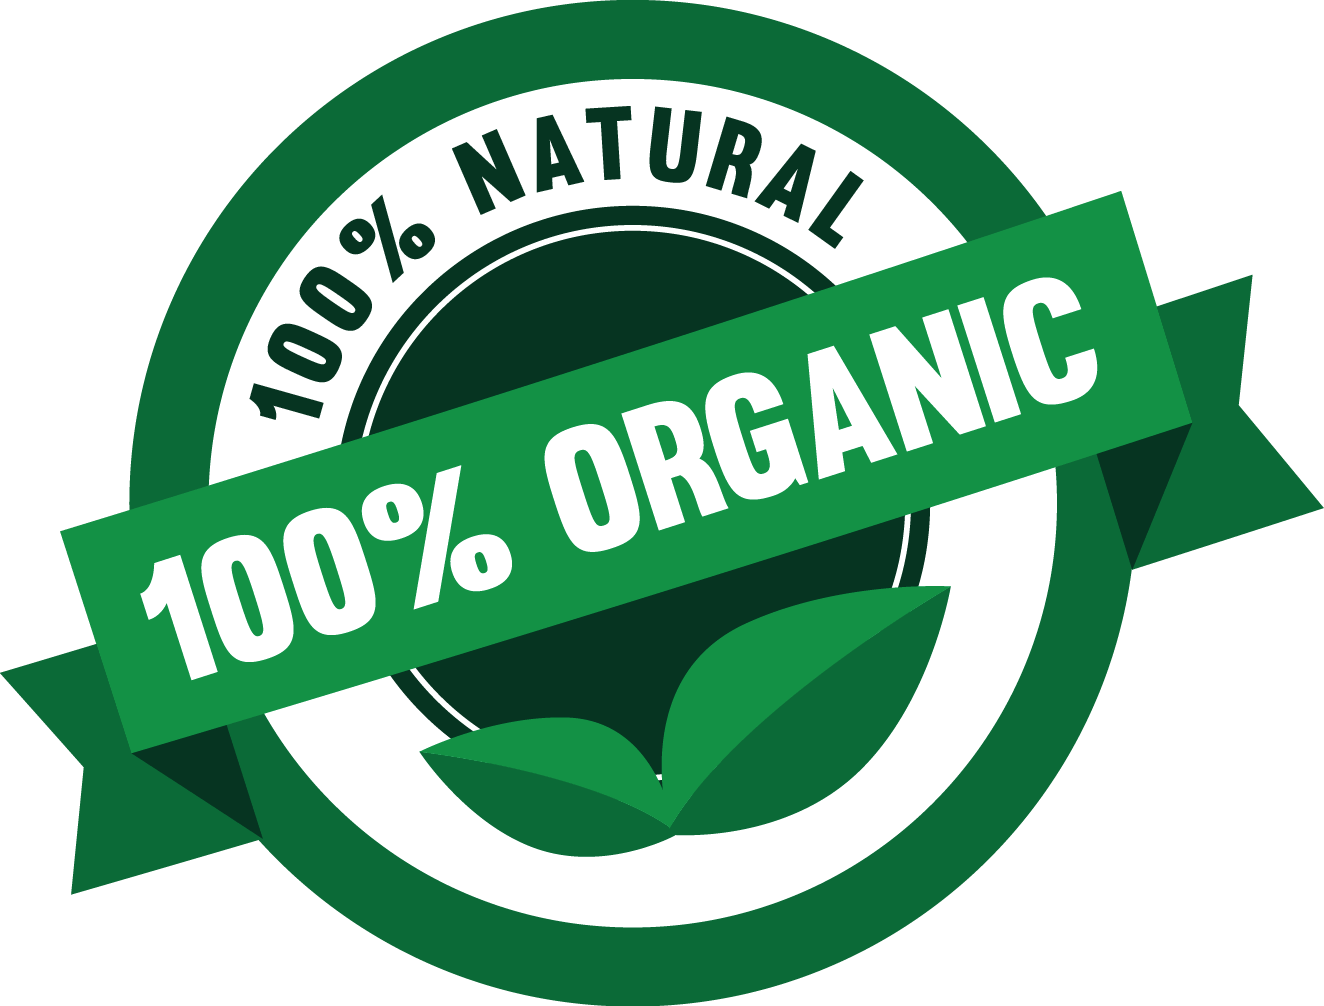 100% Organic natural logo png